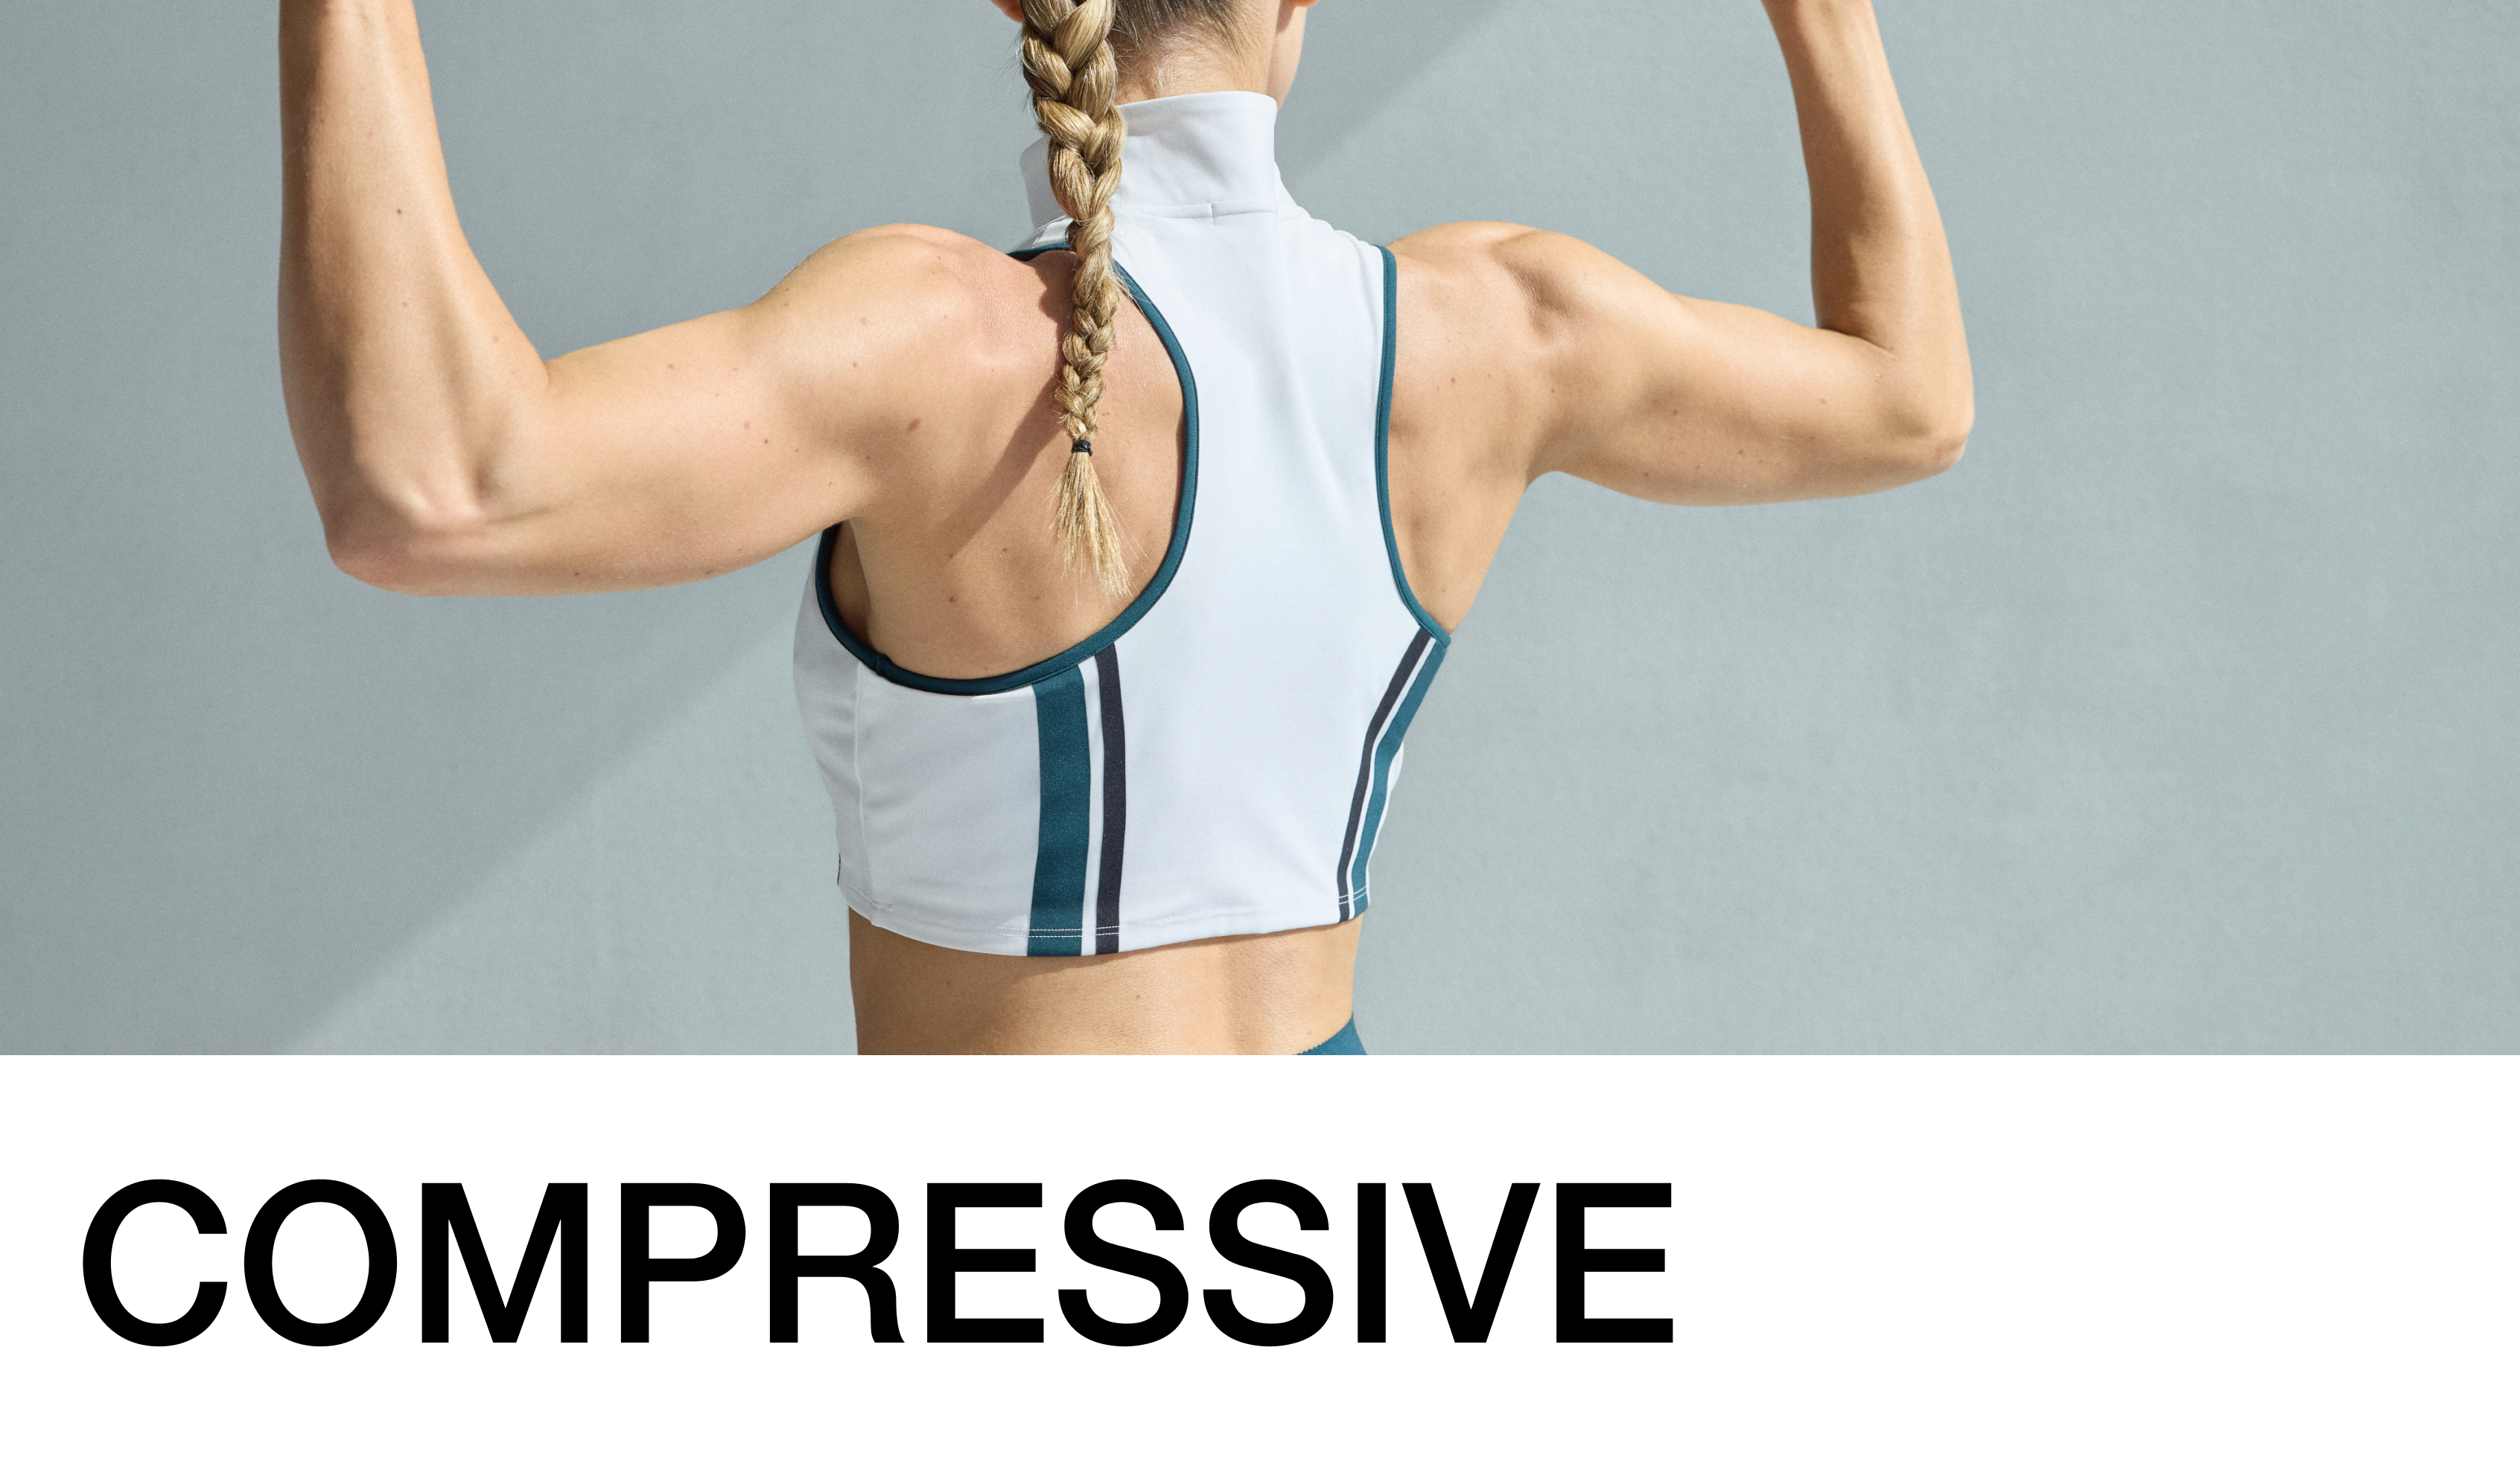 Medium-support compressive bra